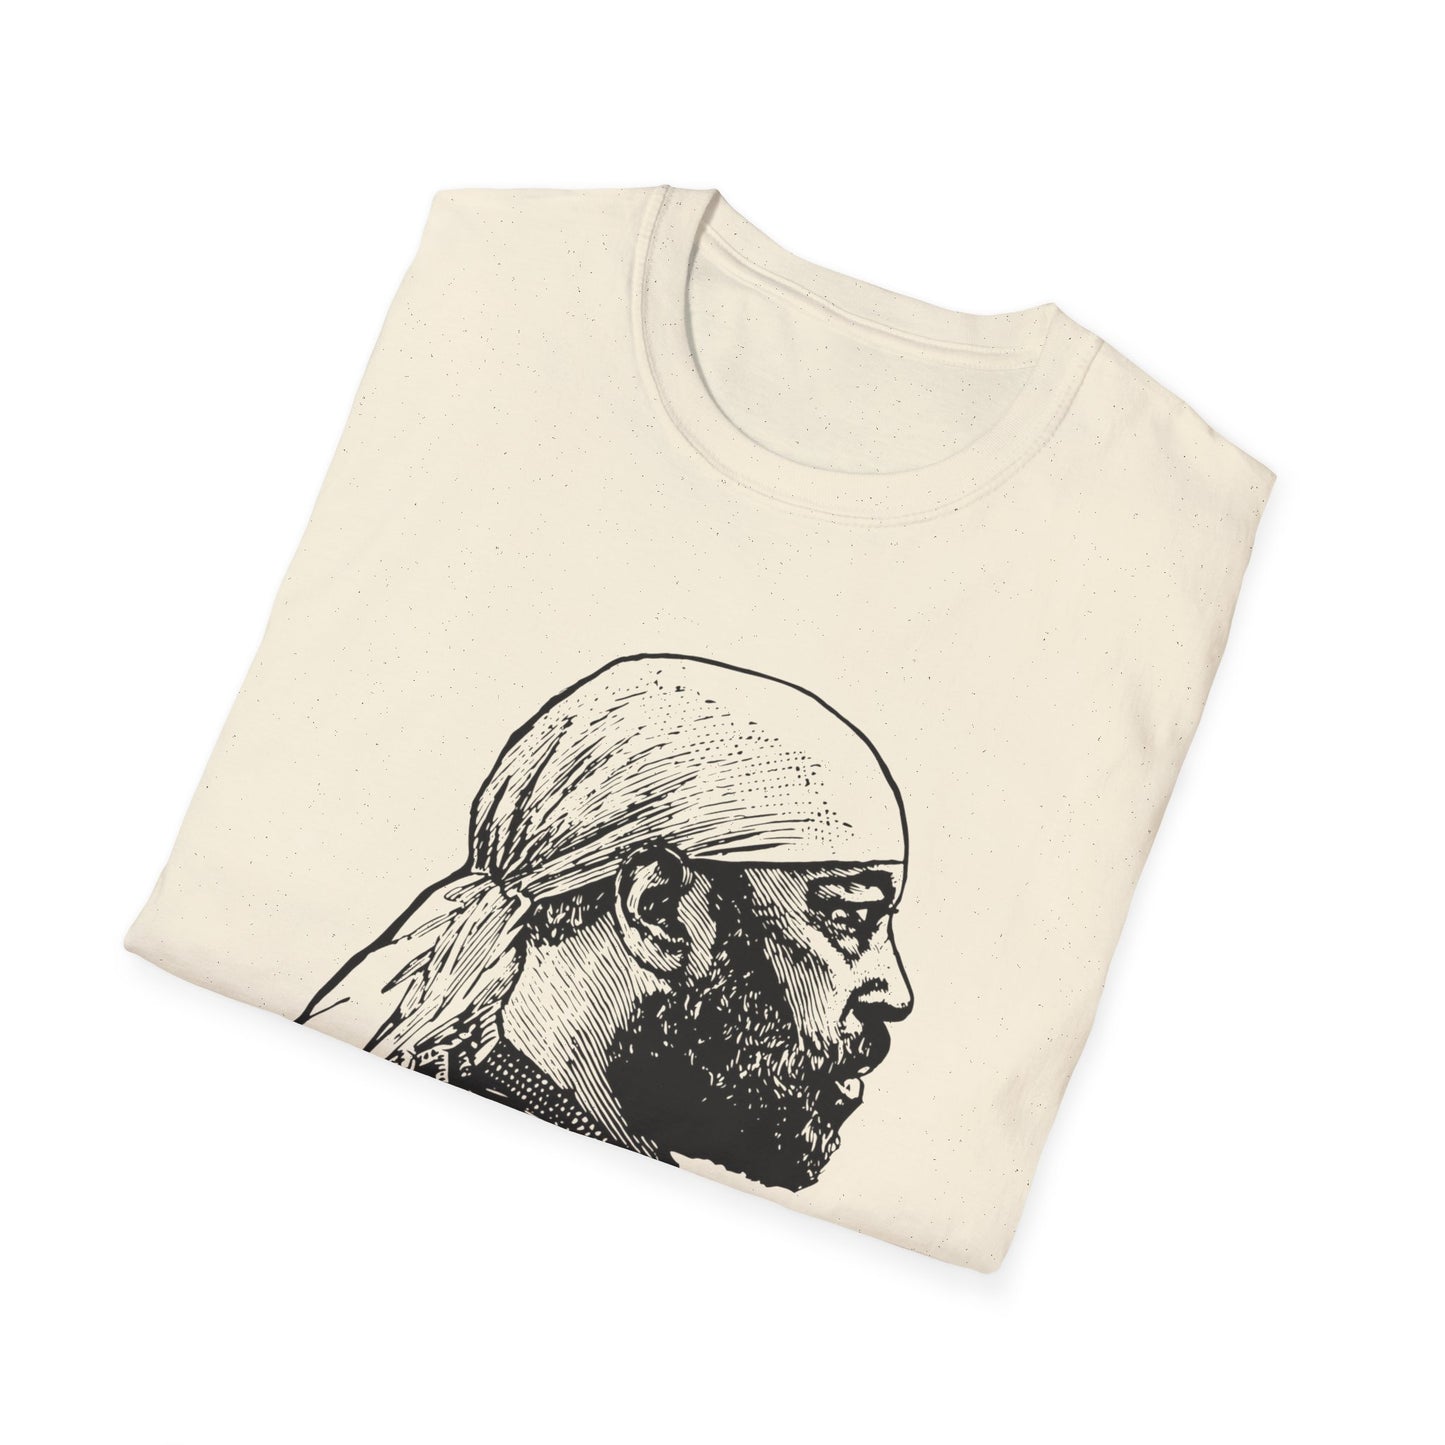 Unisex T-shirt| Ethiopian Heroic Emperor Menelik ||